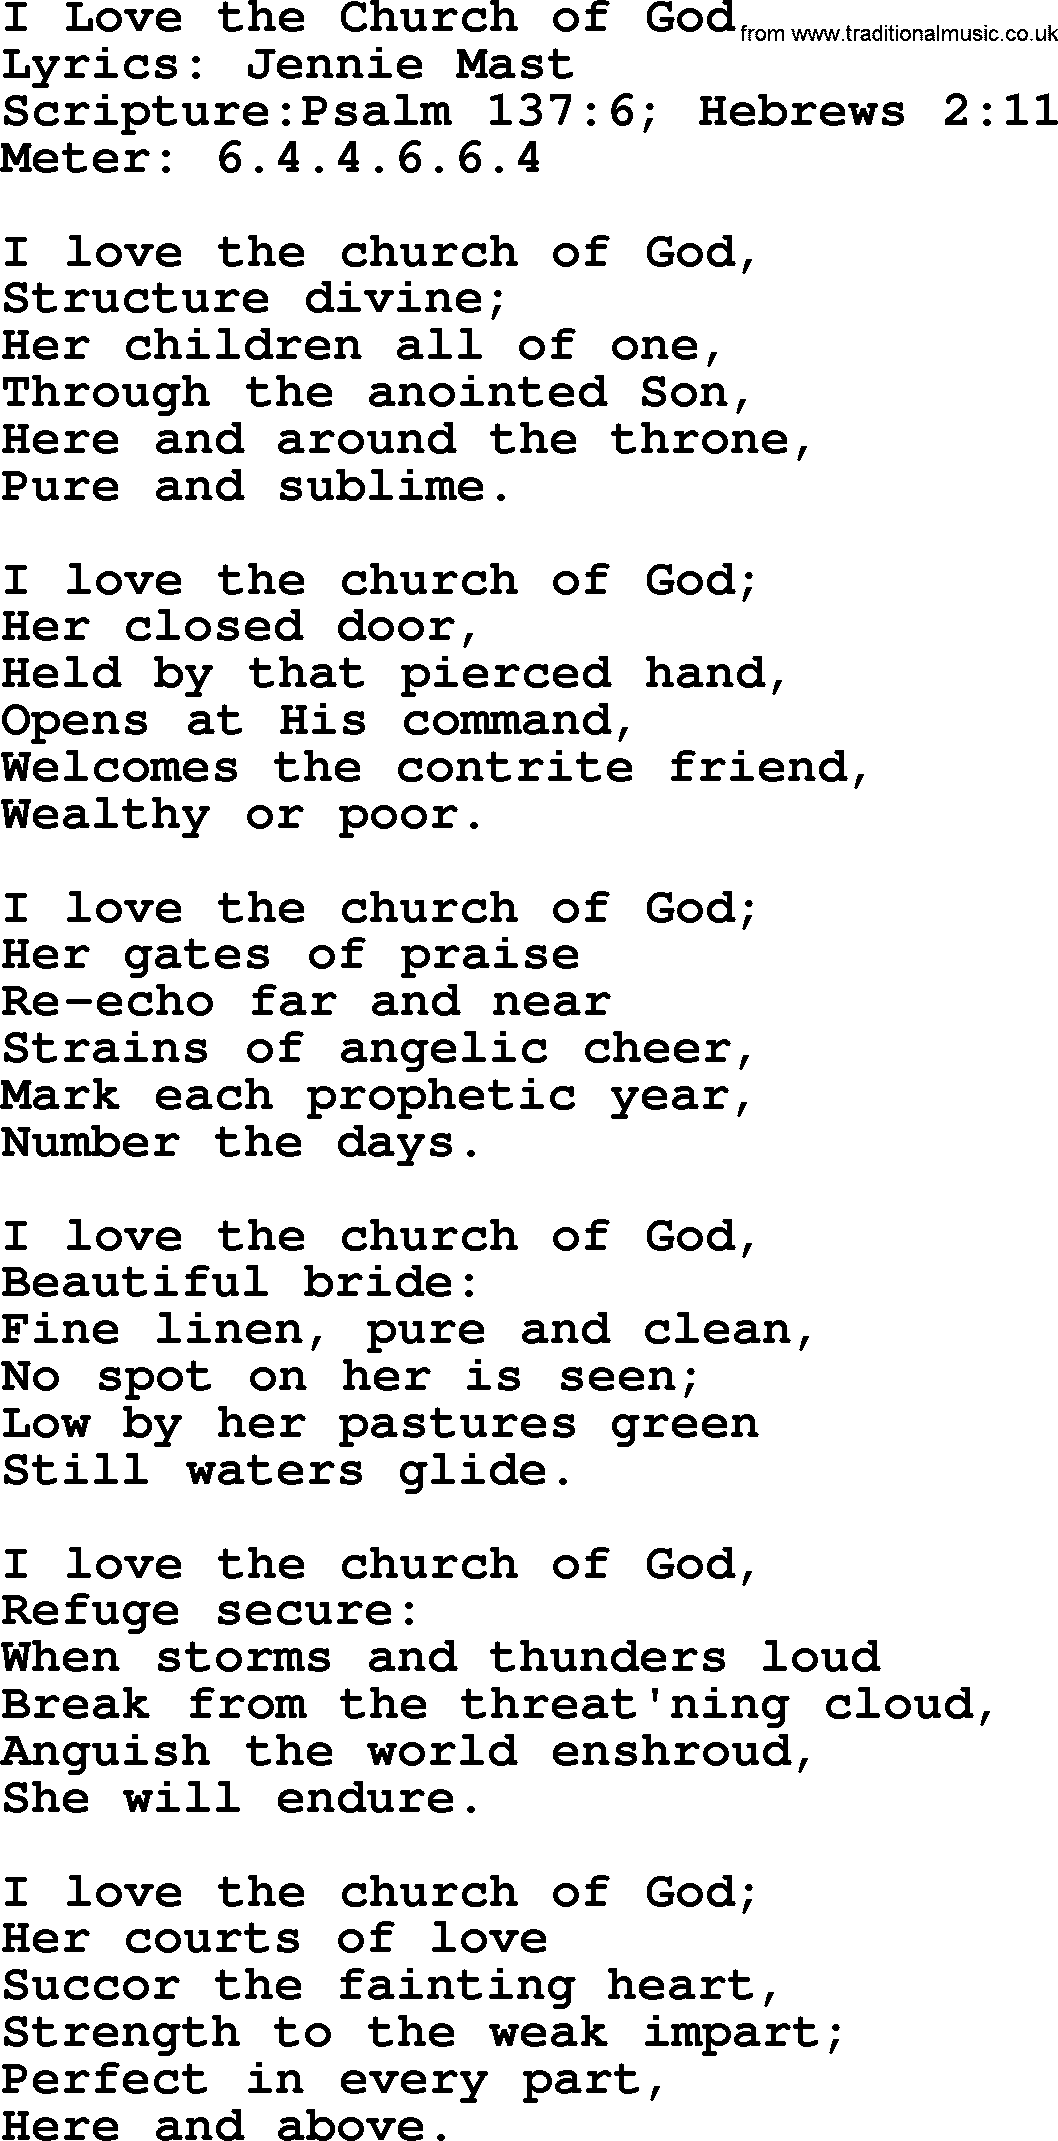 Hymns about  Angels, Hymn: I Love the Church of God, lyrics, sheet music, midi & Mp3 music with PDF